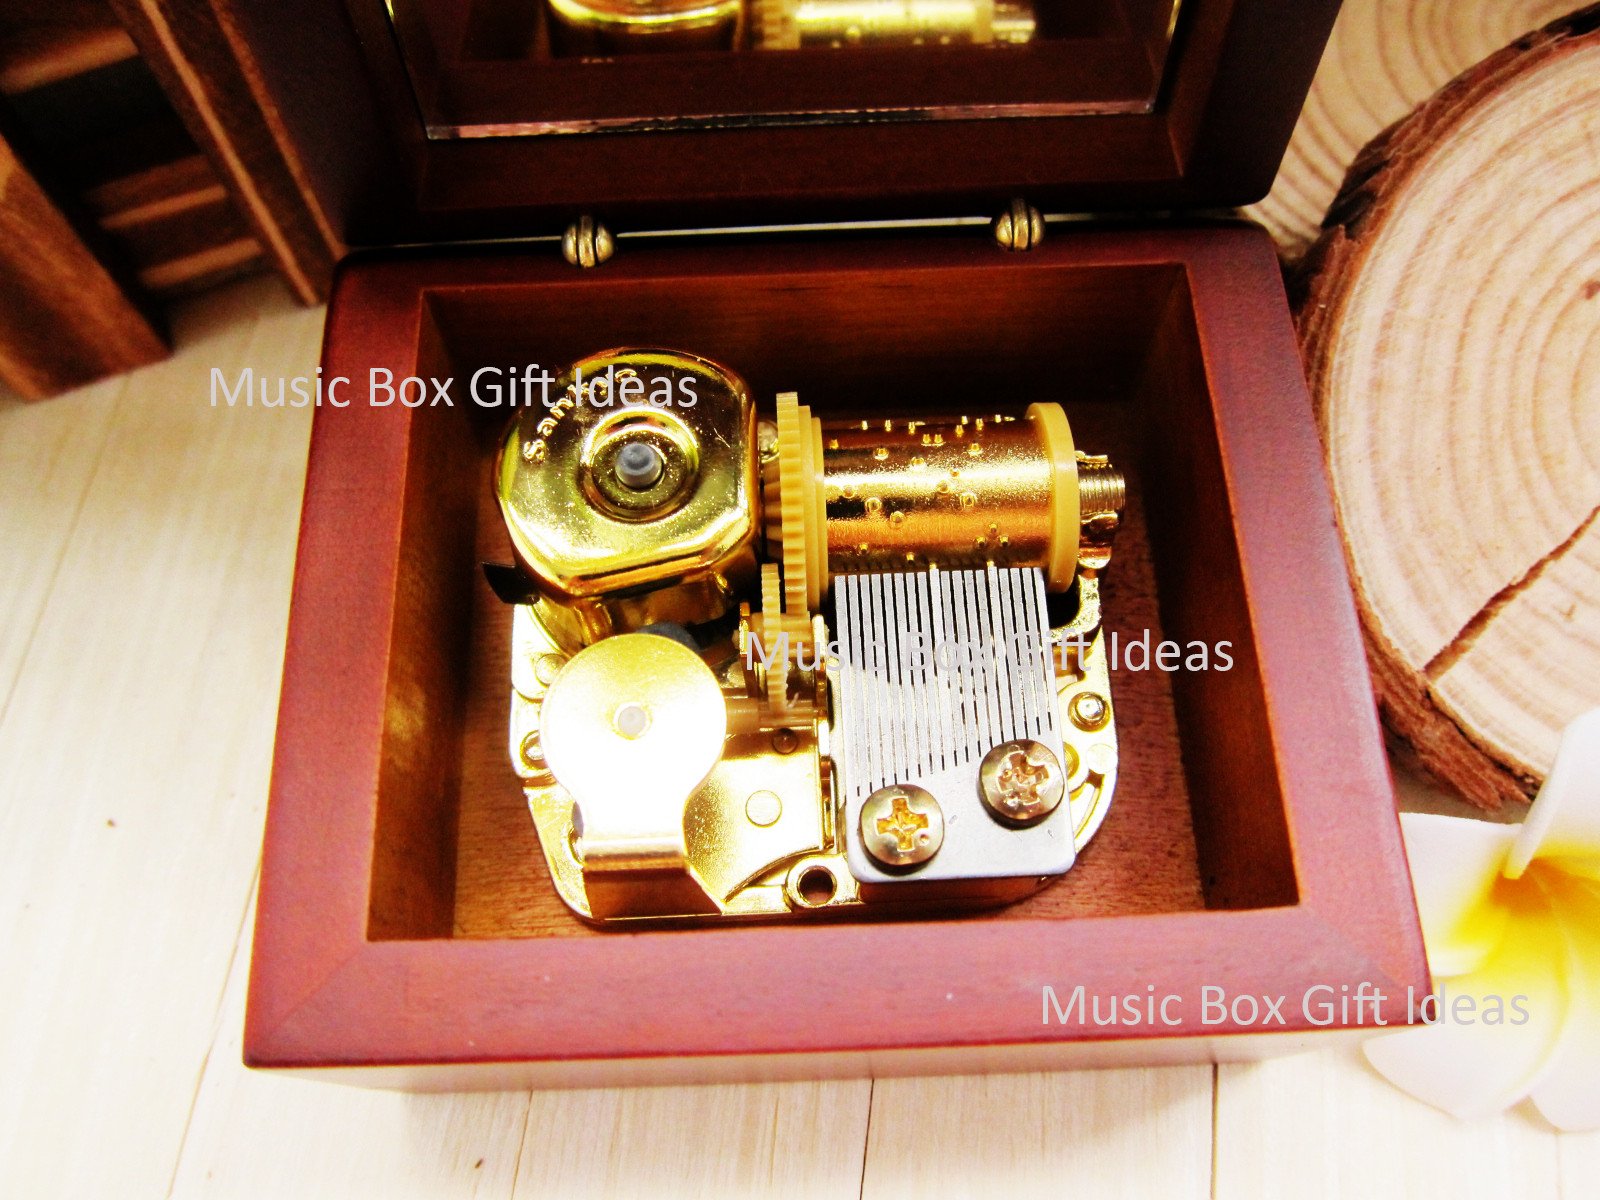 Musical The Phantom of the Opera Masquerade 18-Note Music Box Gift (Wooden Clockwork) - Music Box Gift Ideas